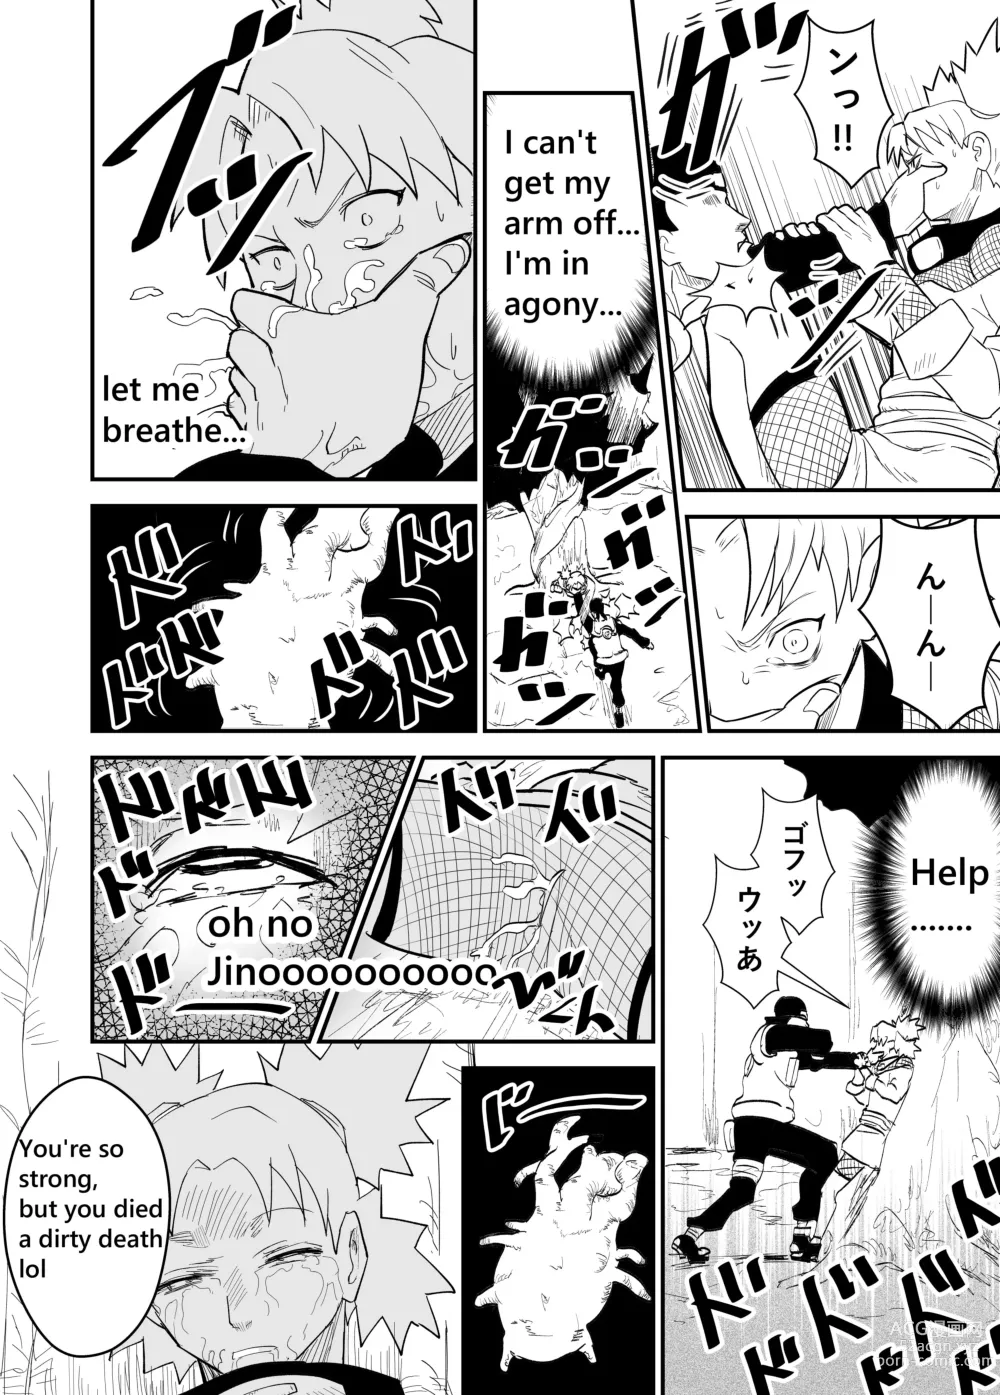 Page 9 of doujinshi Mugen Tsukoyomi Series